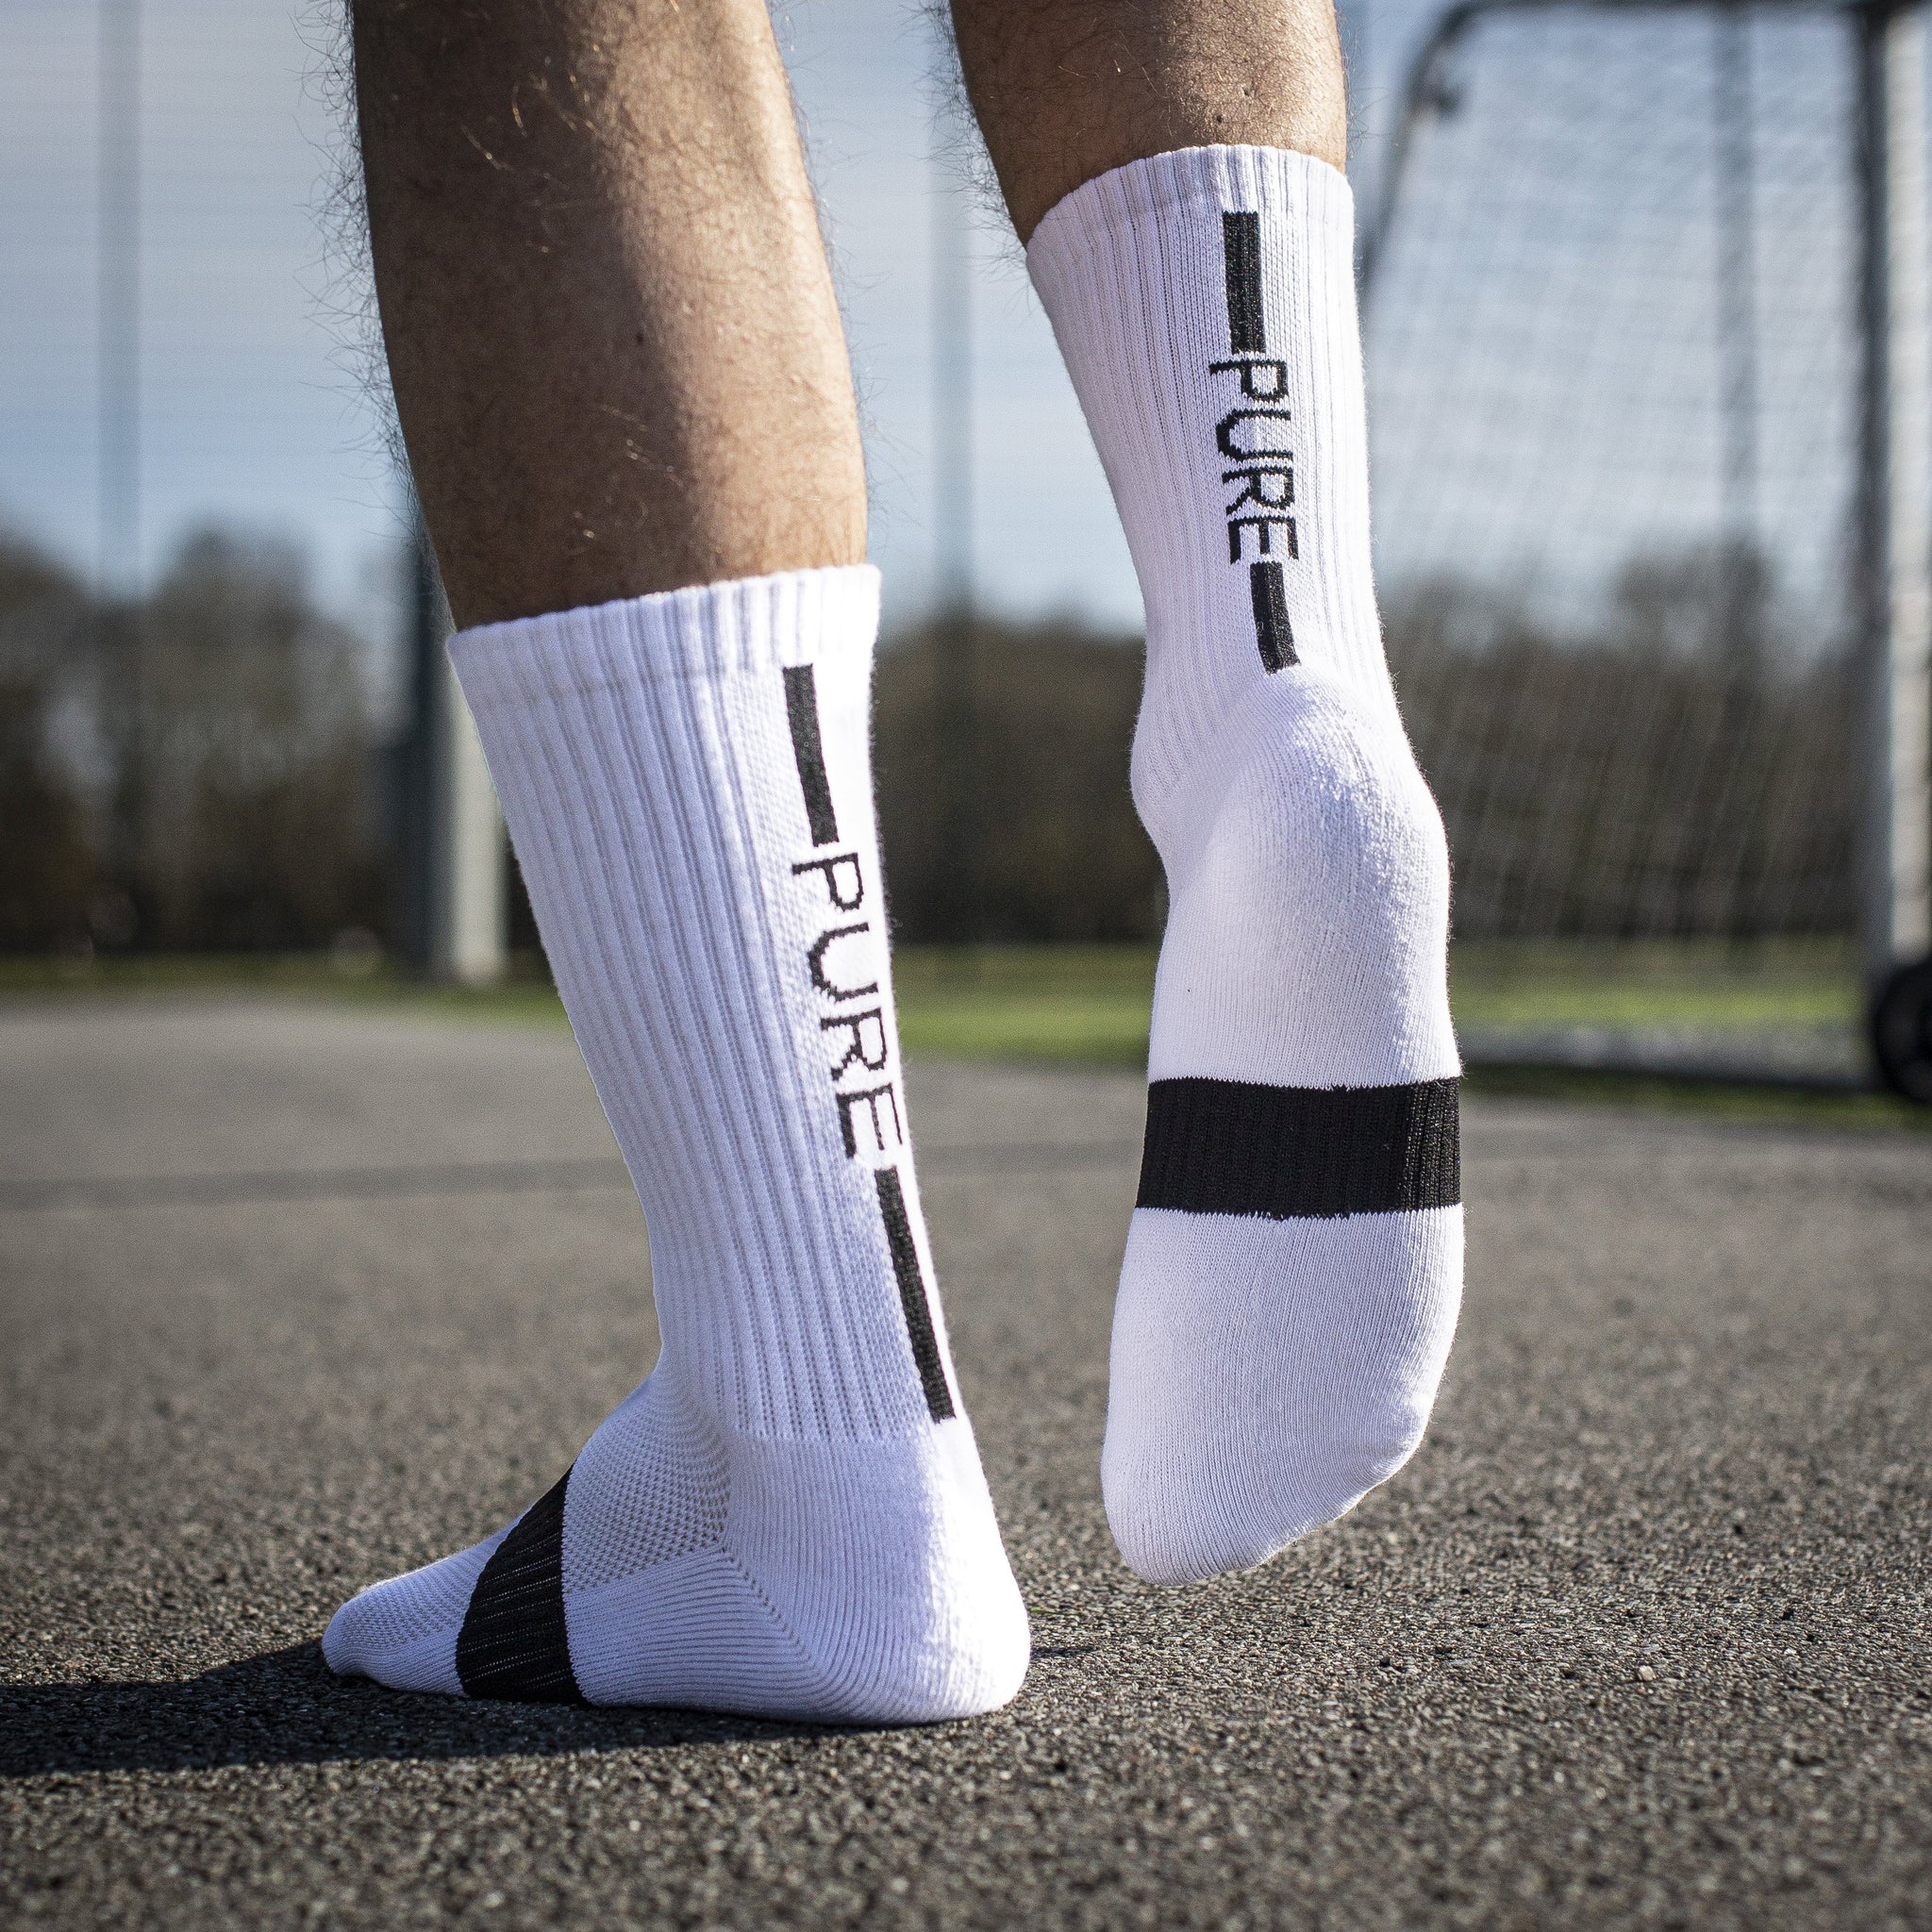 Classic White Grip Socks, White Sports Socks